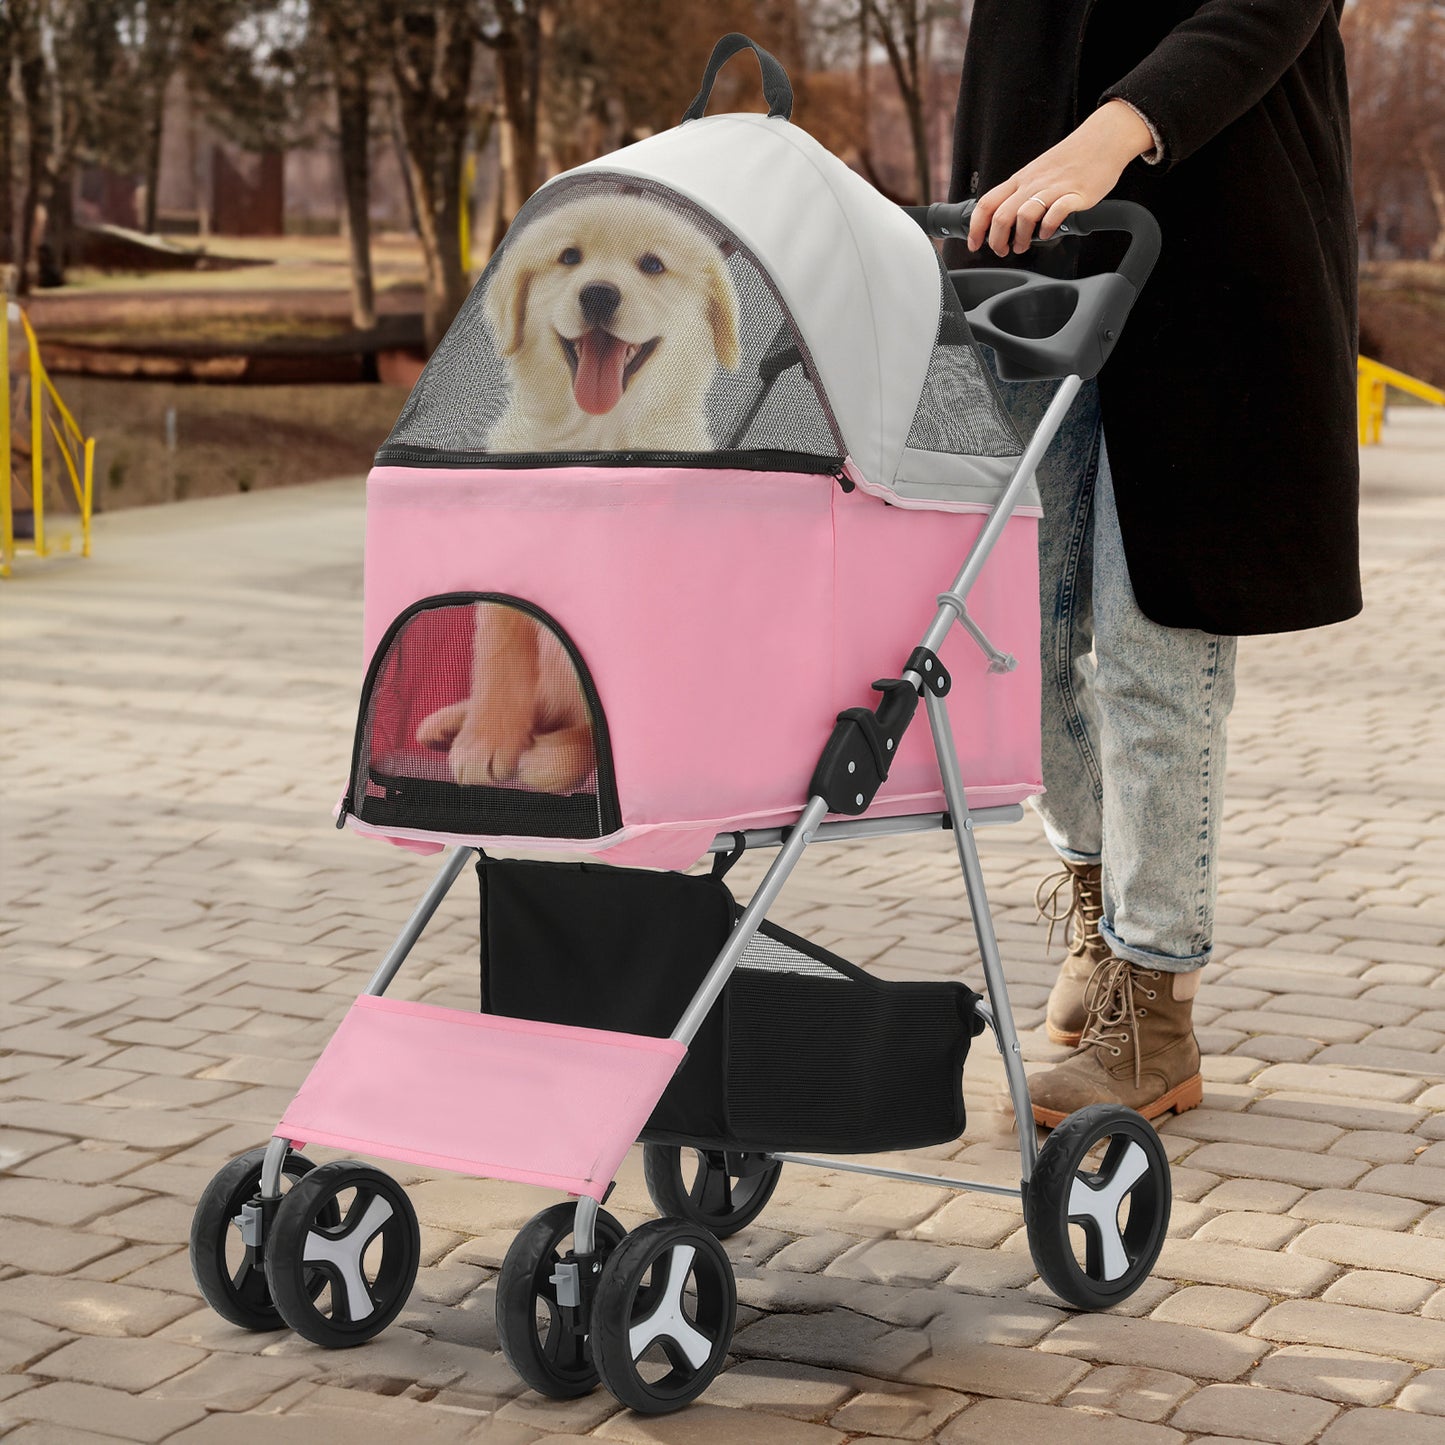 4 Wheels Pet Stroller - 28*19*38 inch - Detachable Basket